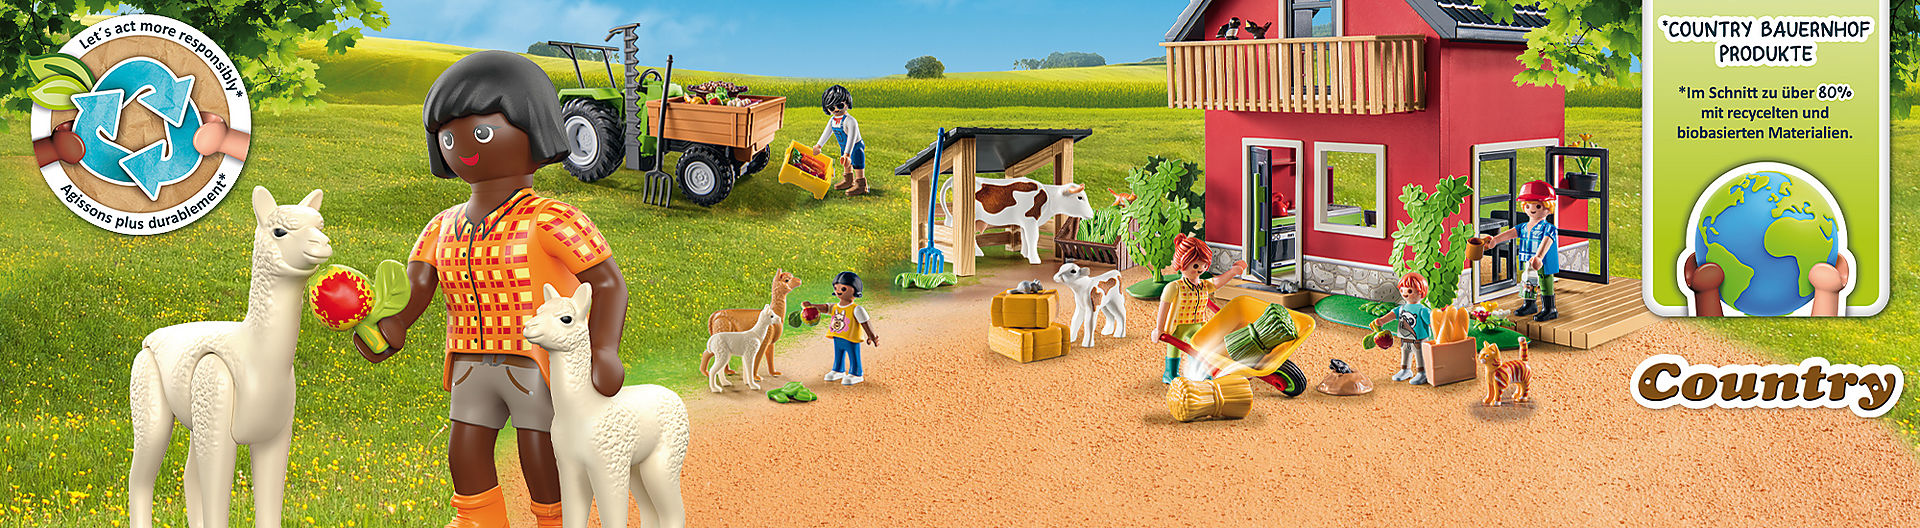 Playmobil Country Bauernhofs